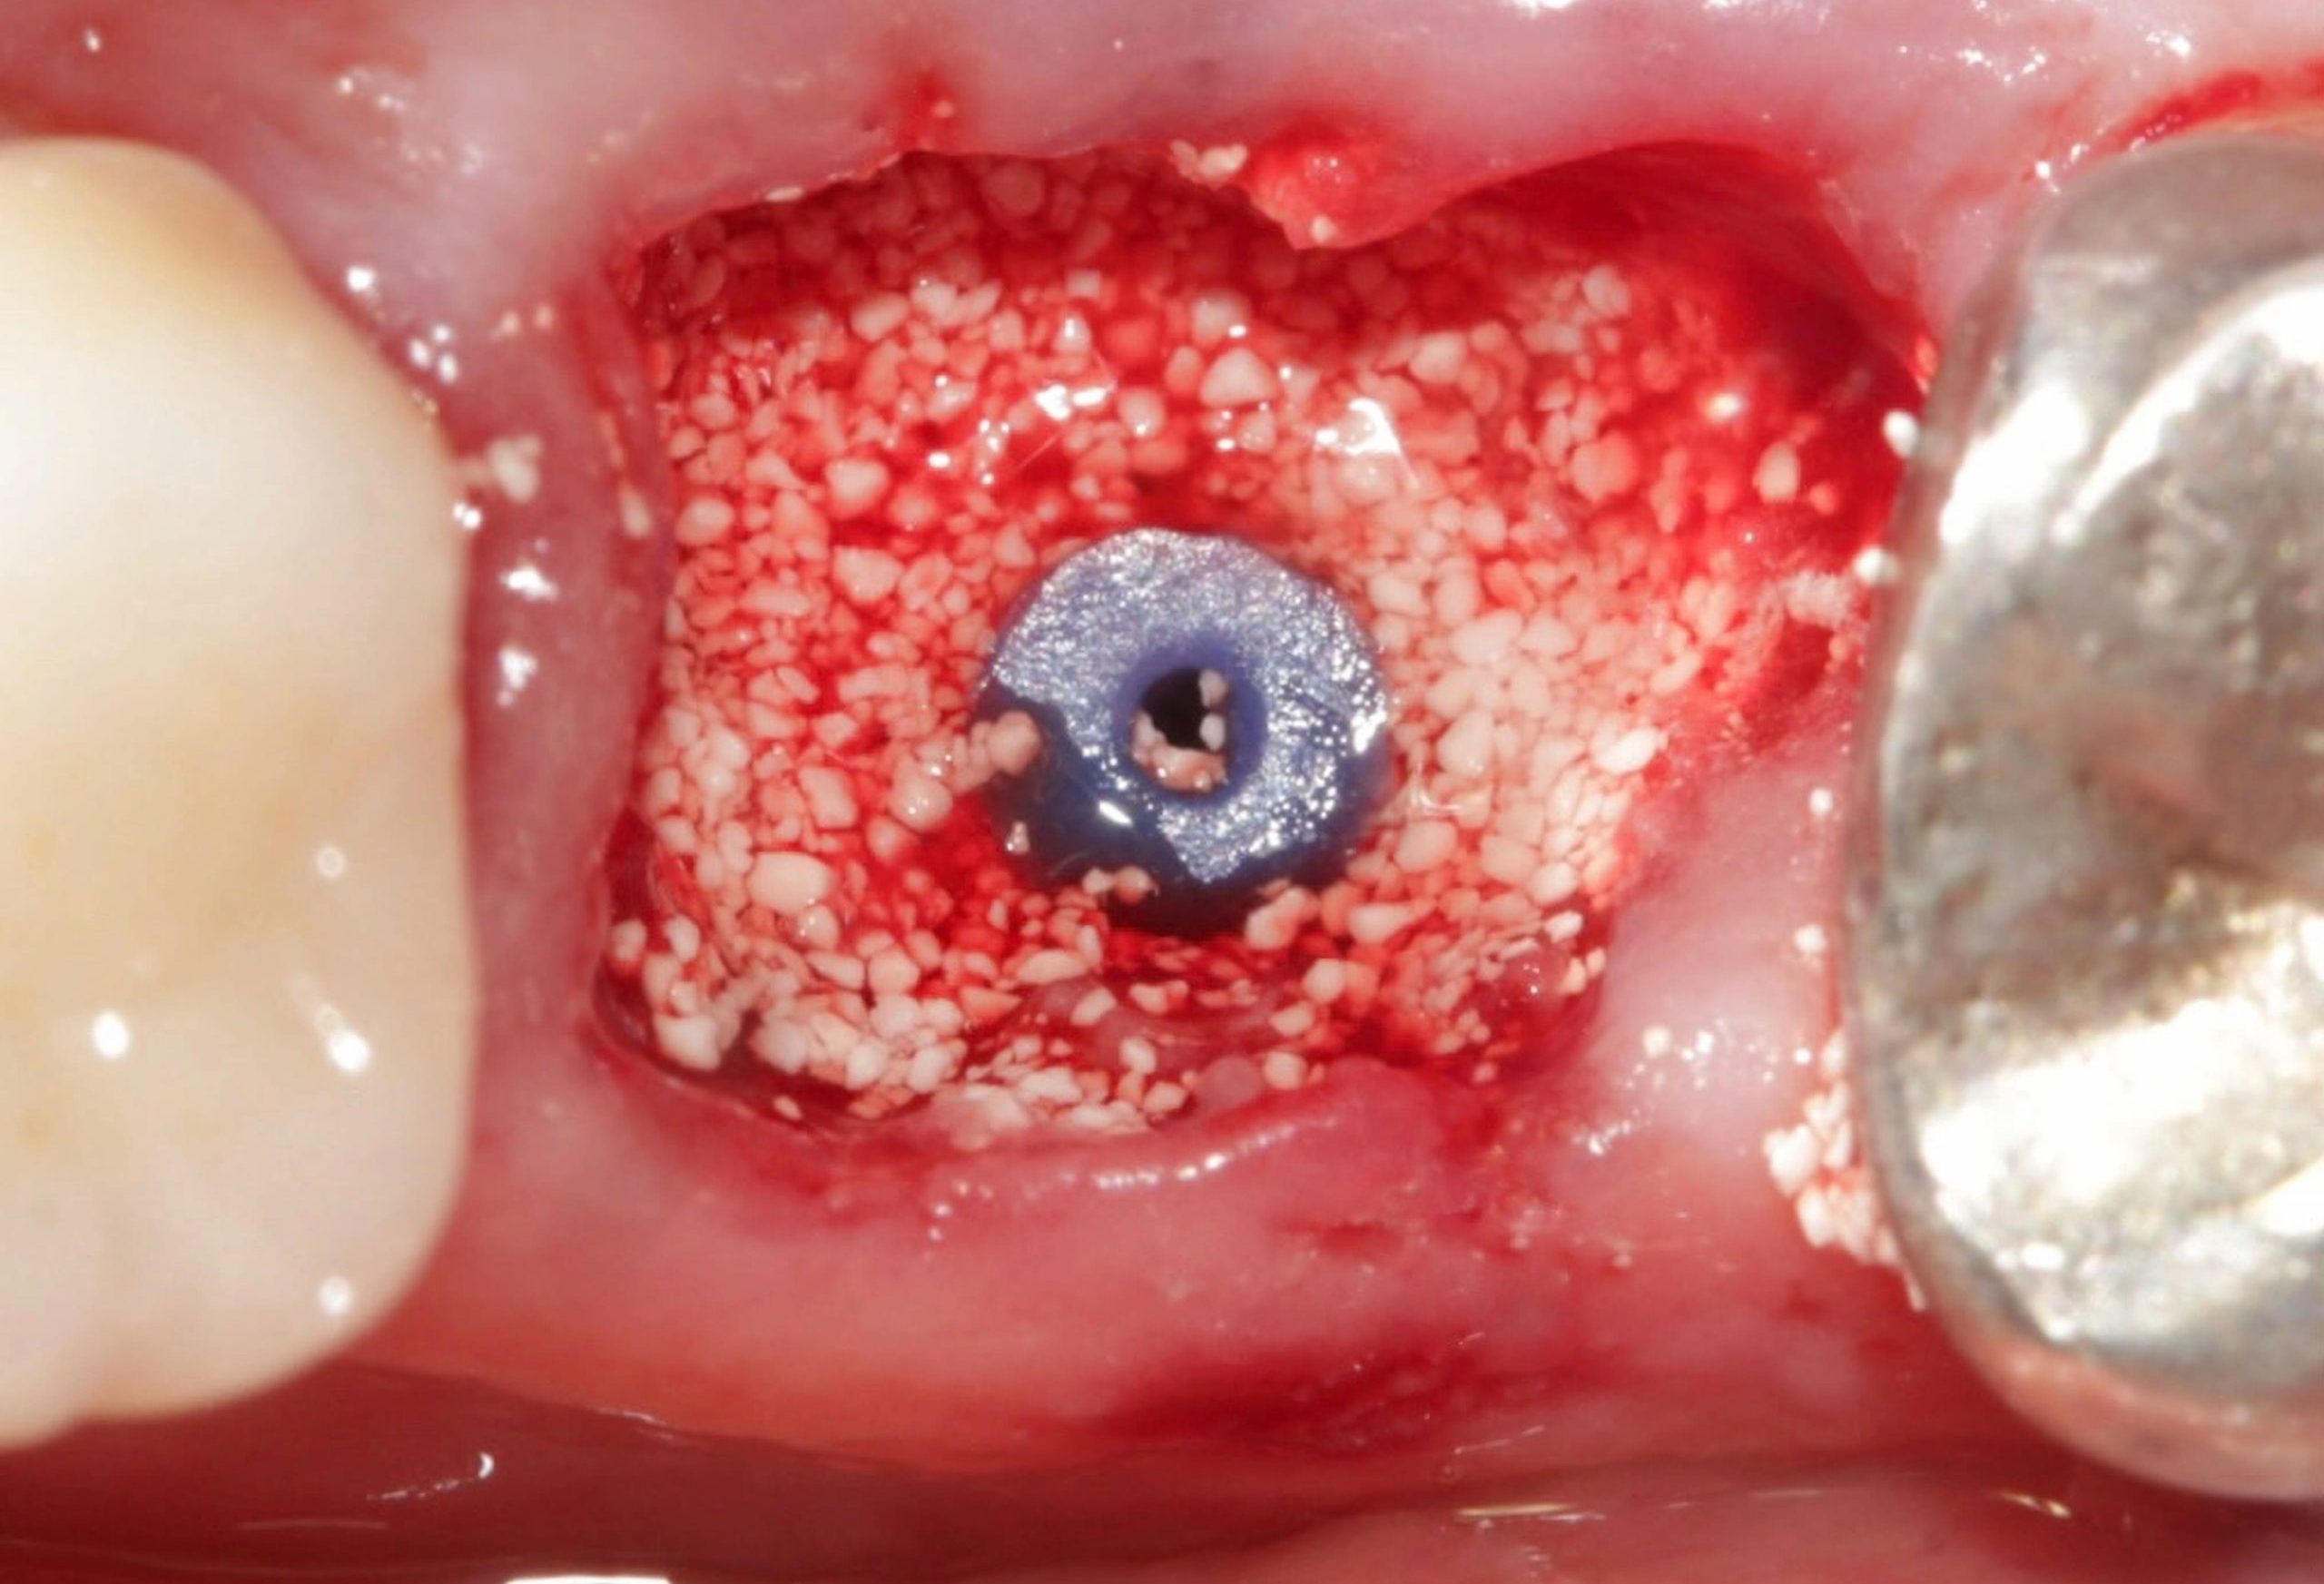 Prrench gap scaled e1705670439923 - Implante Imediato Arcsys em molar inferior